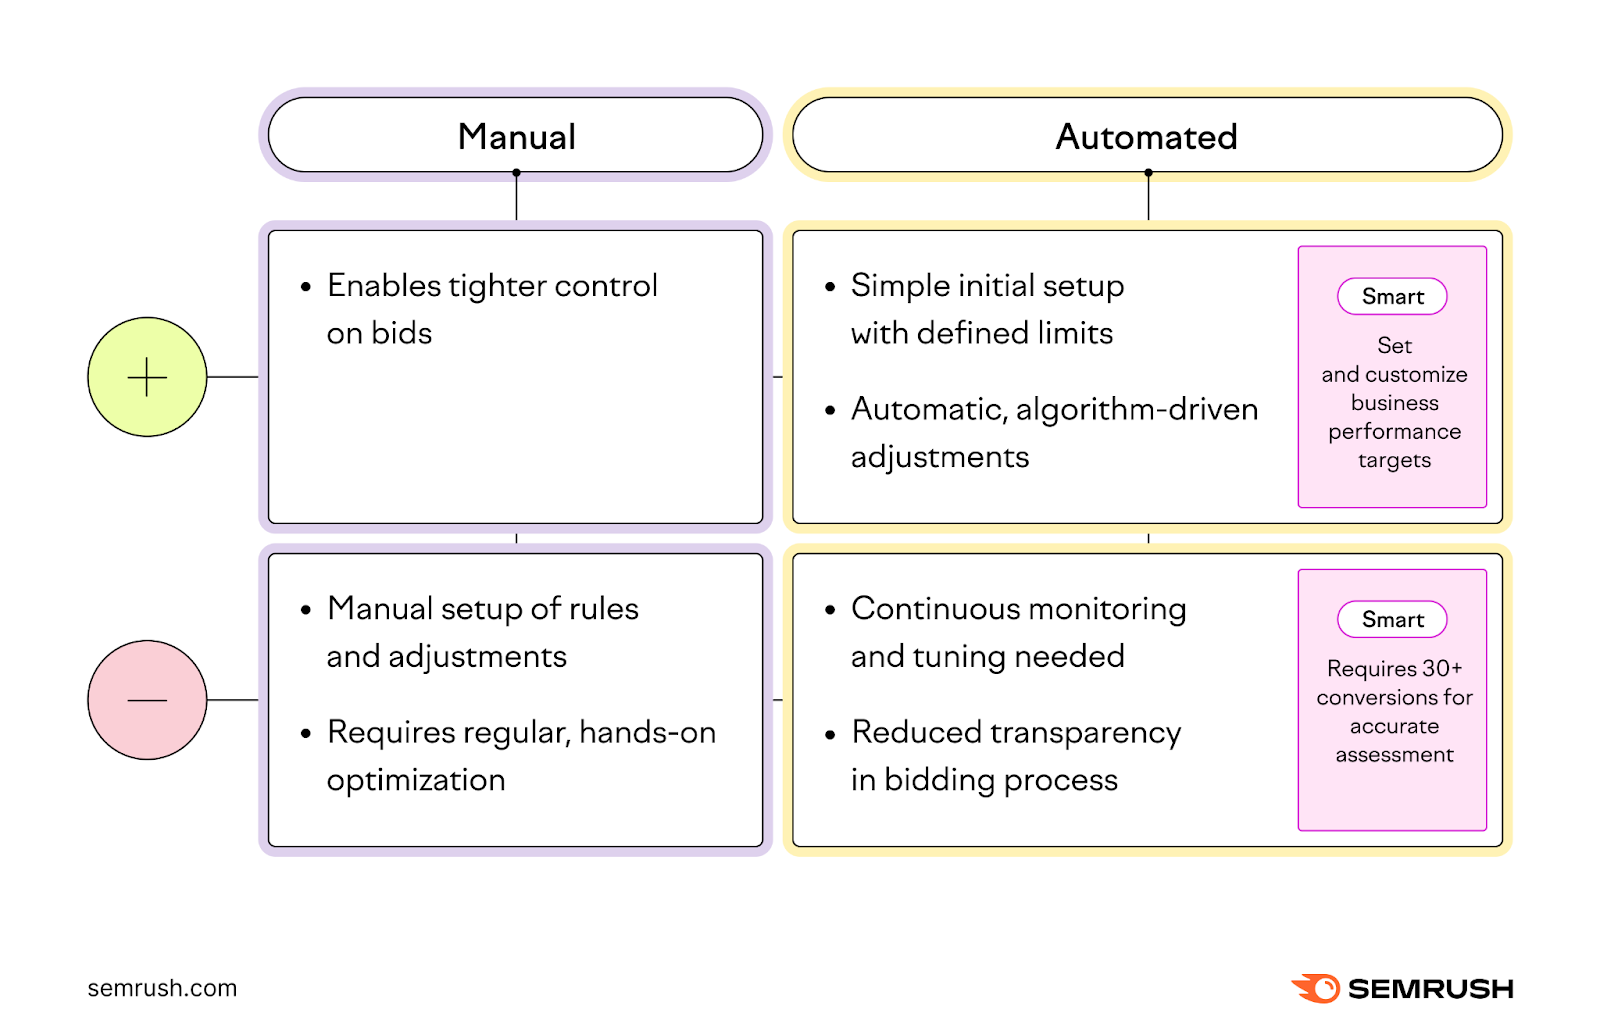  manual vs automated bidding